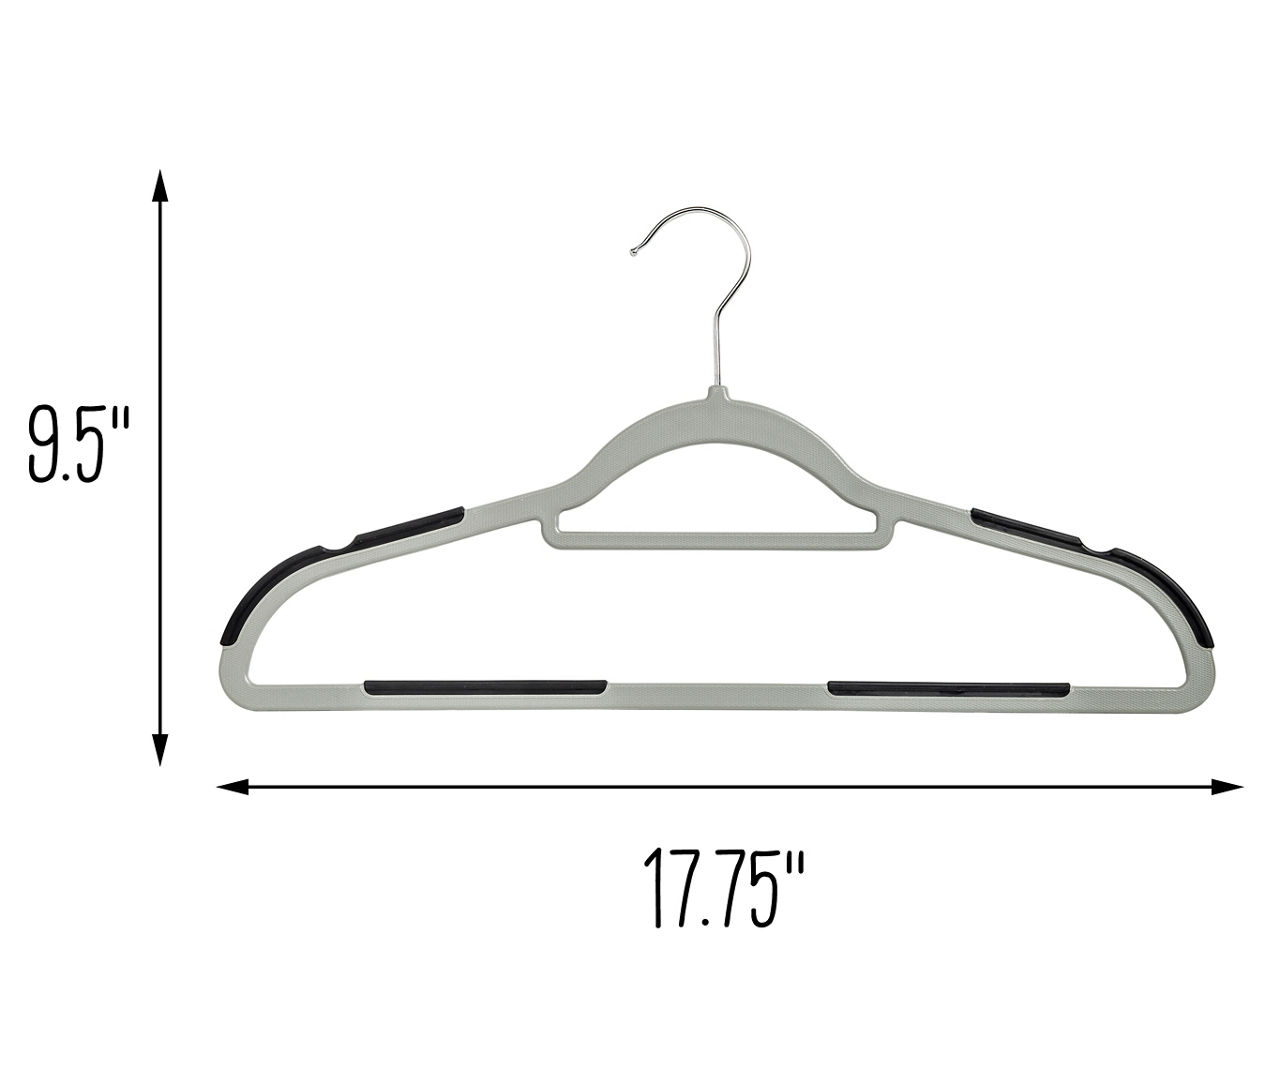 Gray Slim Anti-Slip Hangers, 50-Count